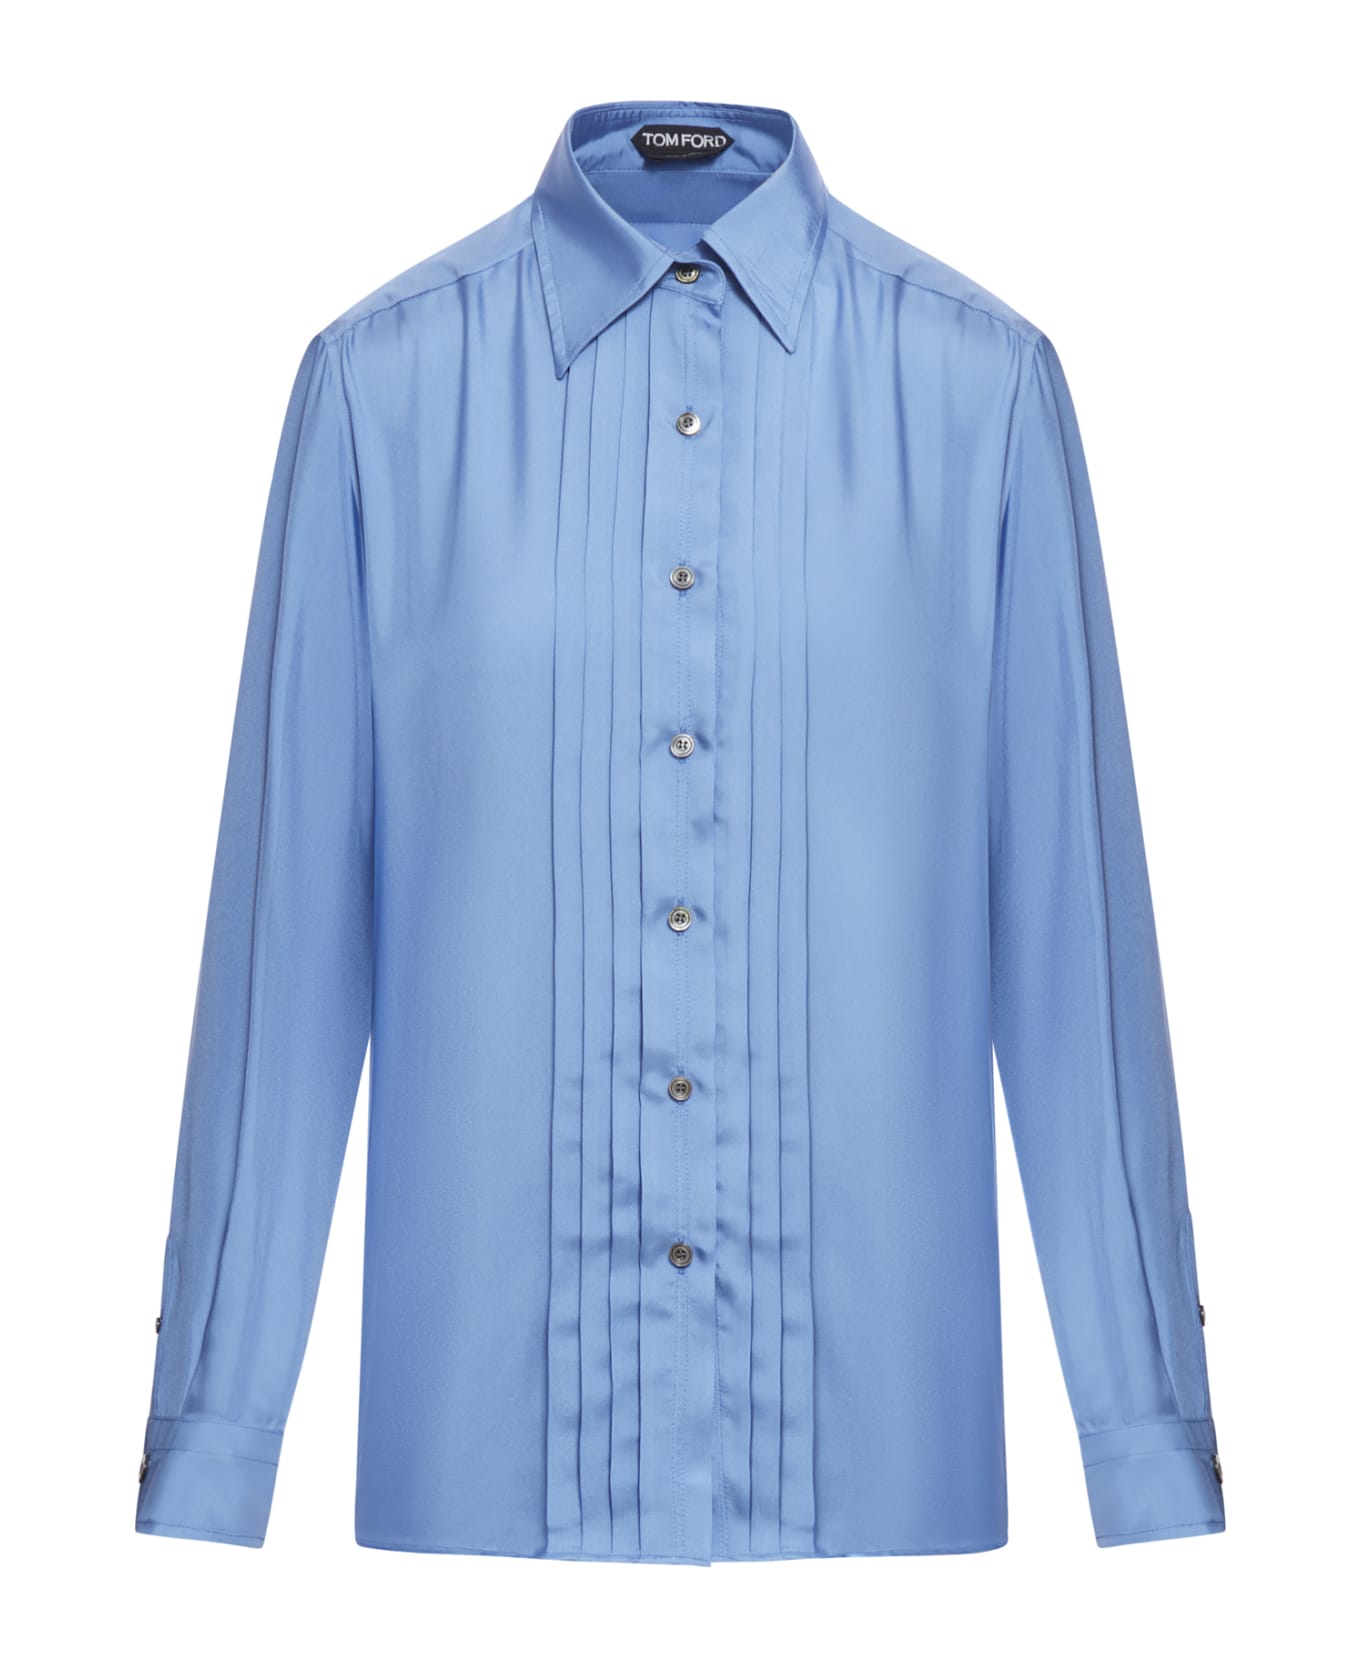 Tom Ford Fluid Viscose Silk Twill Shirt - Stone Blue